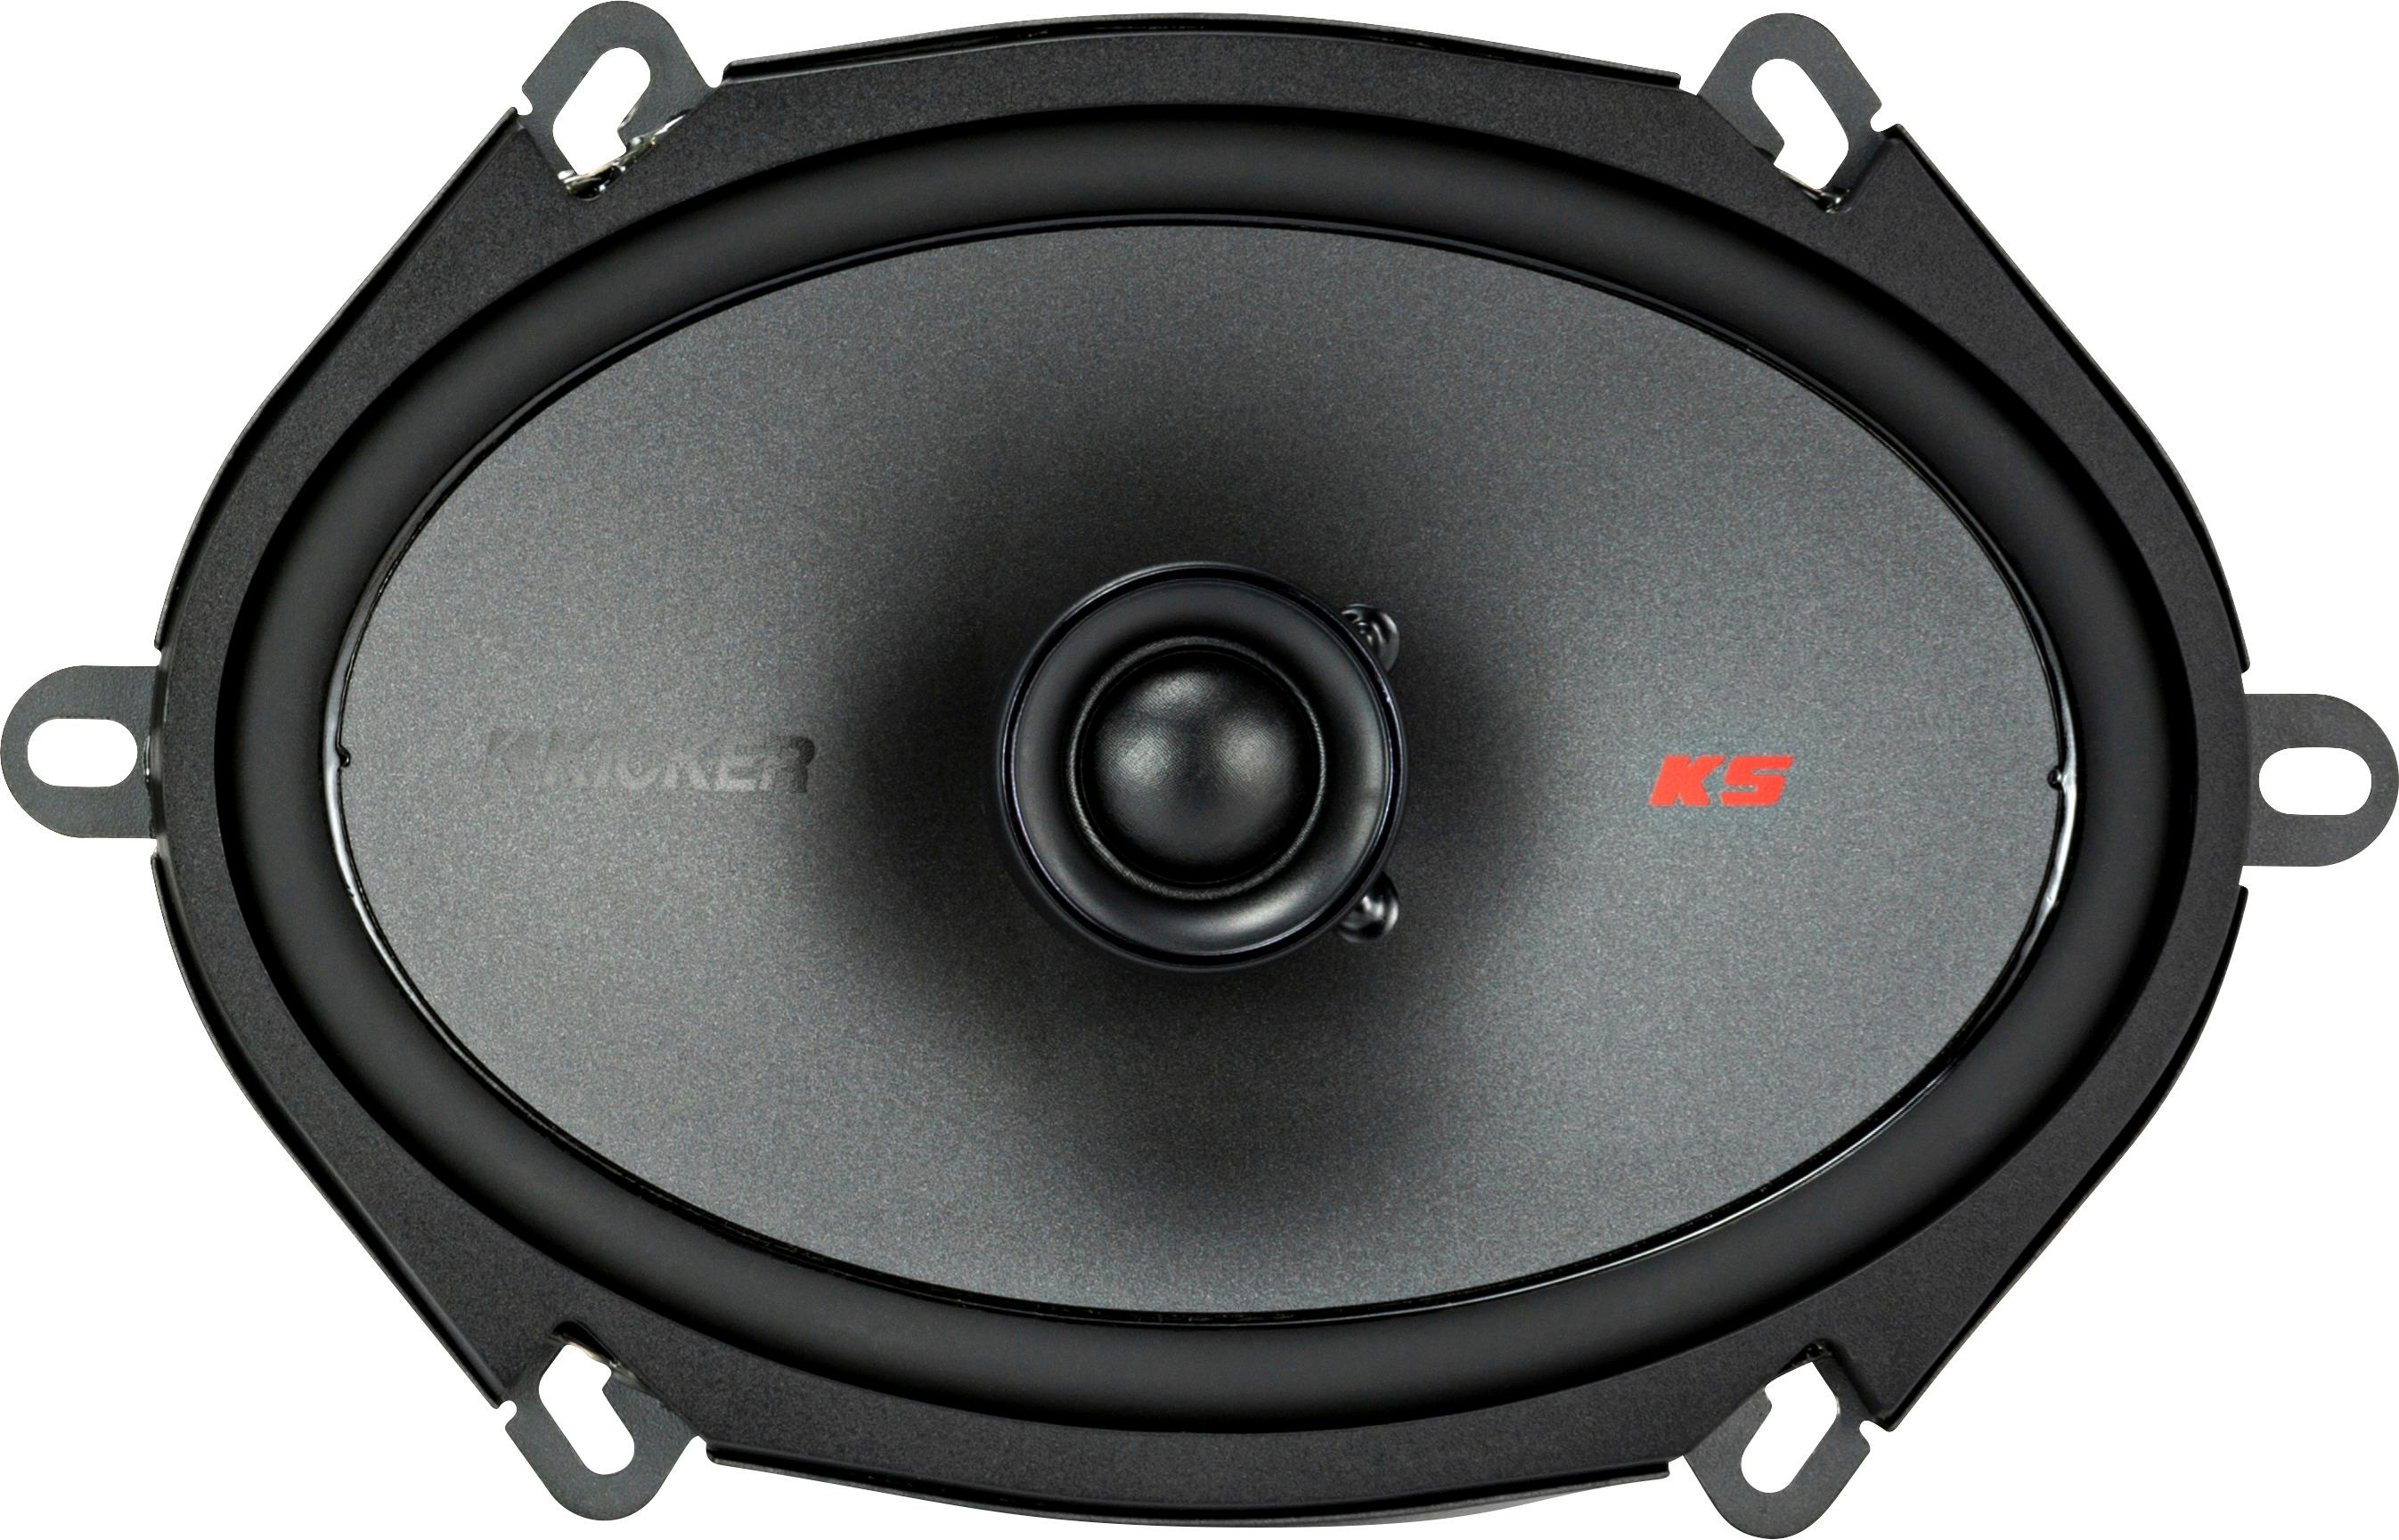 KICKER - KS Series 6 x 8 2-Way Car Speaker with Polypropylene Cones (Each) - Black was $99.99 now $79.99 (20.0% off)